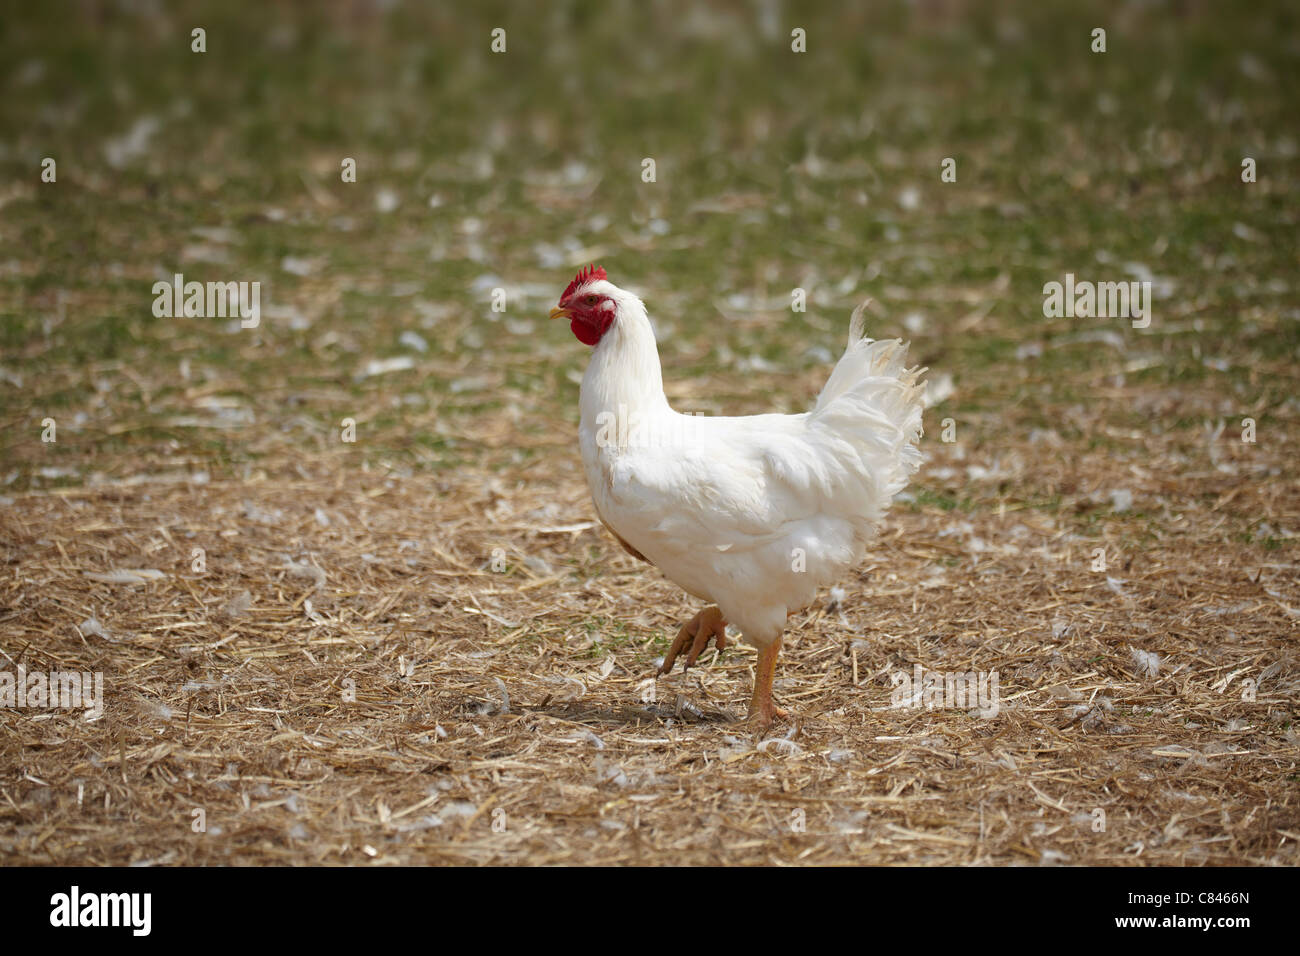 Chicken walking in yard Stock Photo